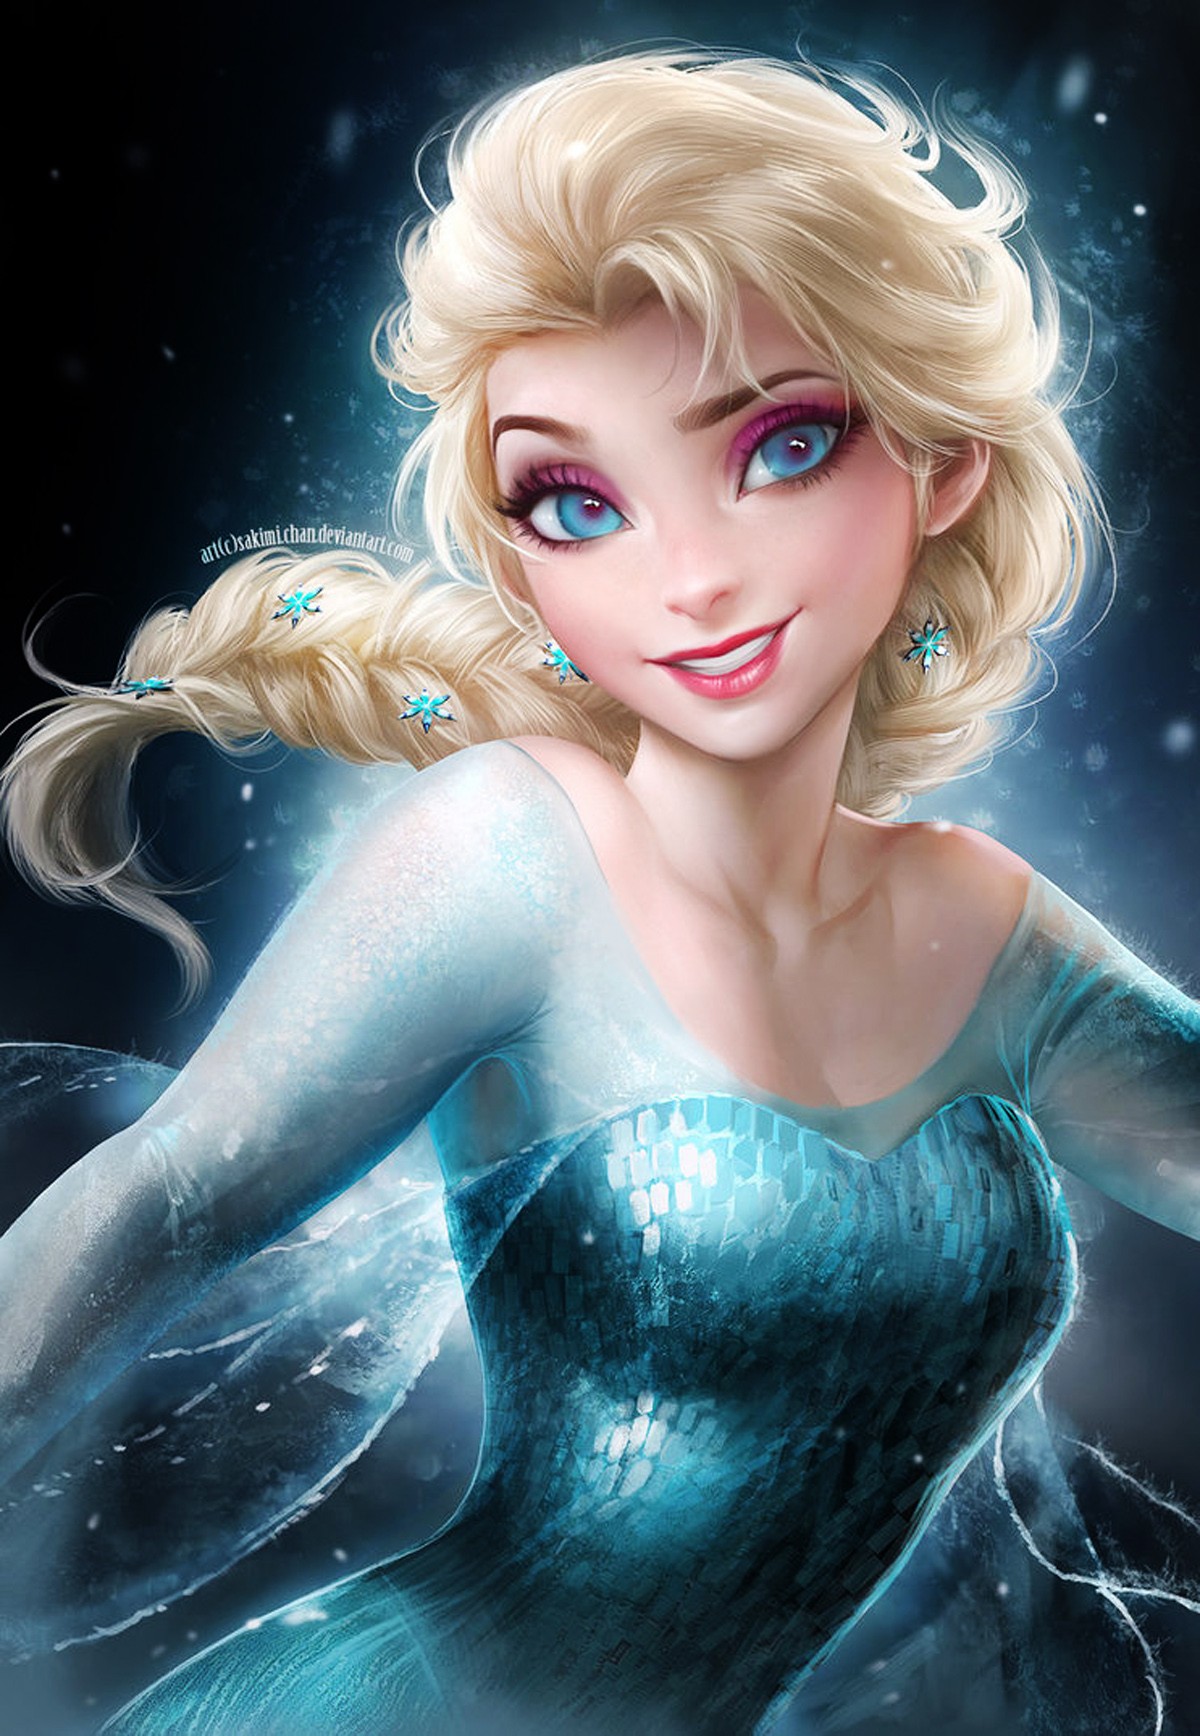 General 1200x1736 Elsa Frozen (movie) fan art Disney blue eyes blue dress Disney princesses fantasy girl smiling dress blonde long hair